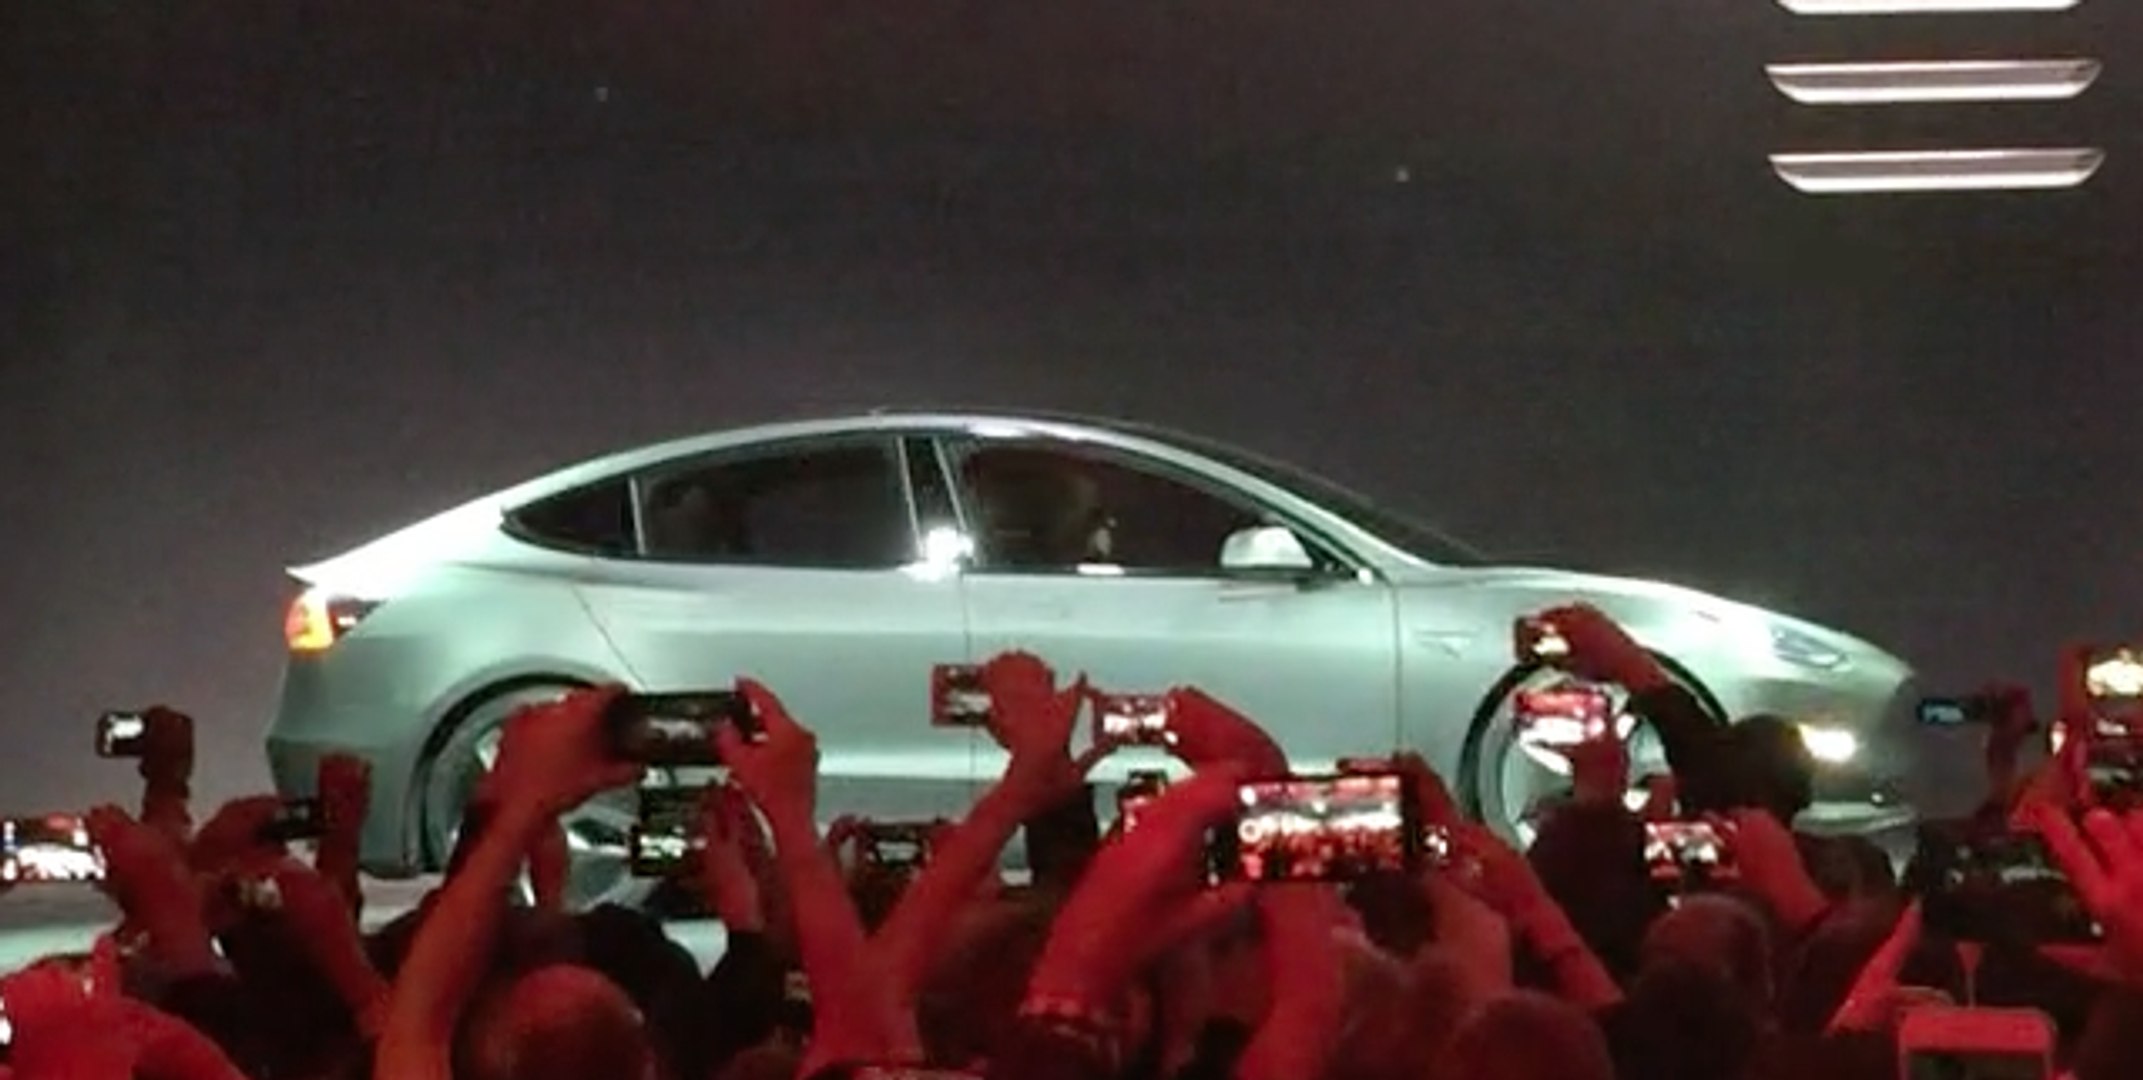 Tesla Model 3 (2017)